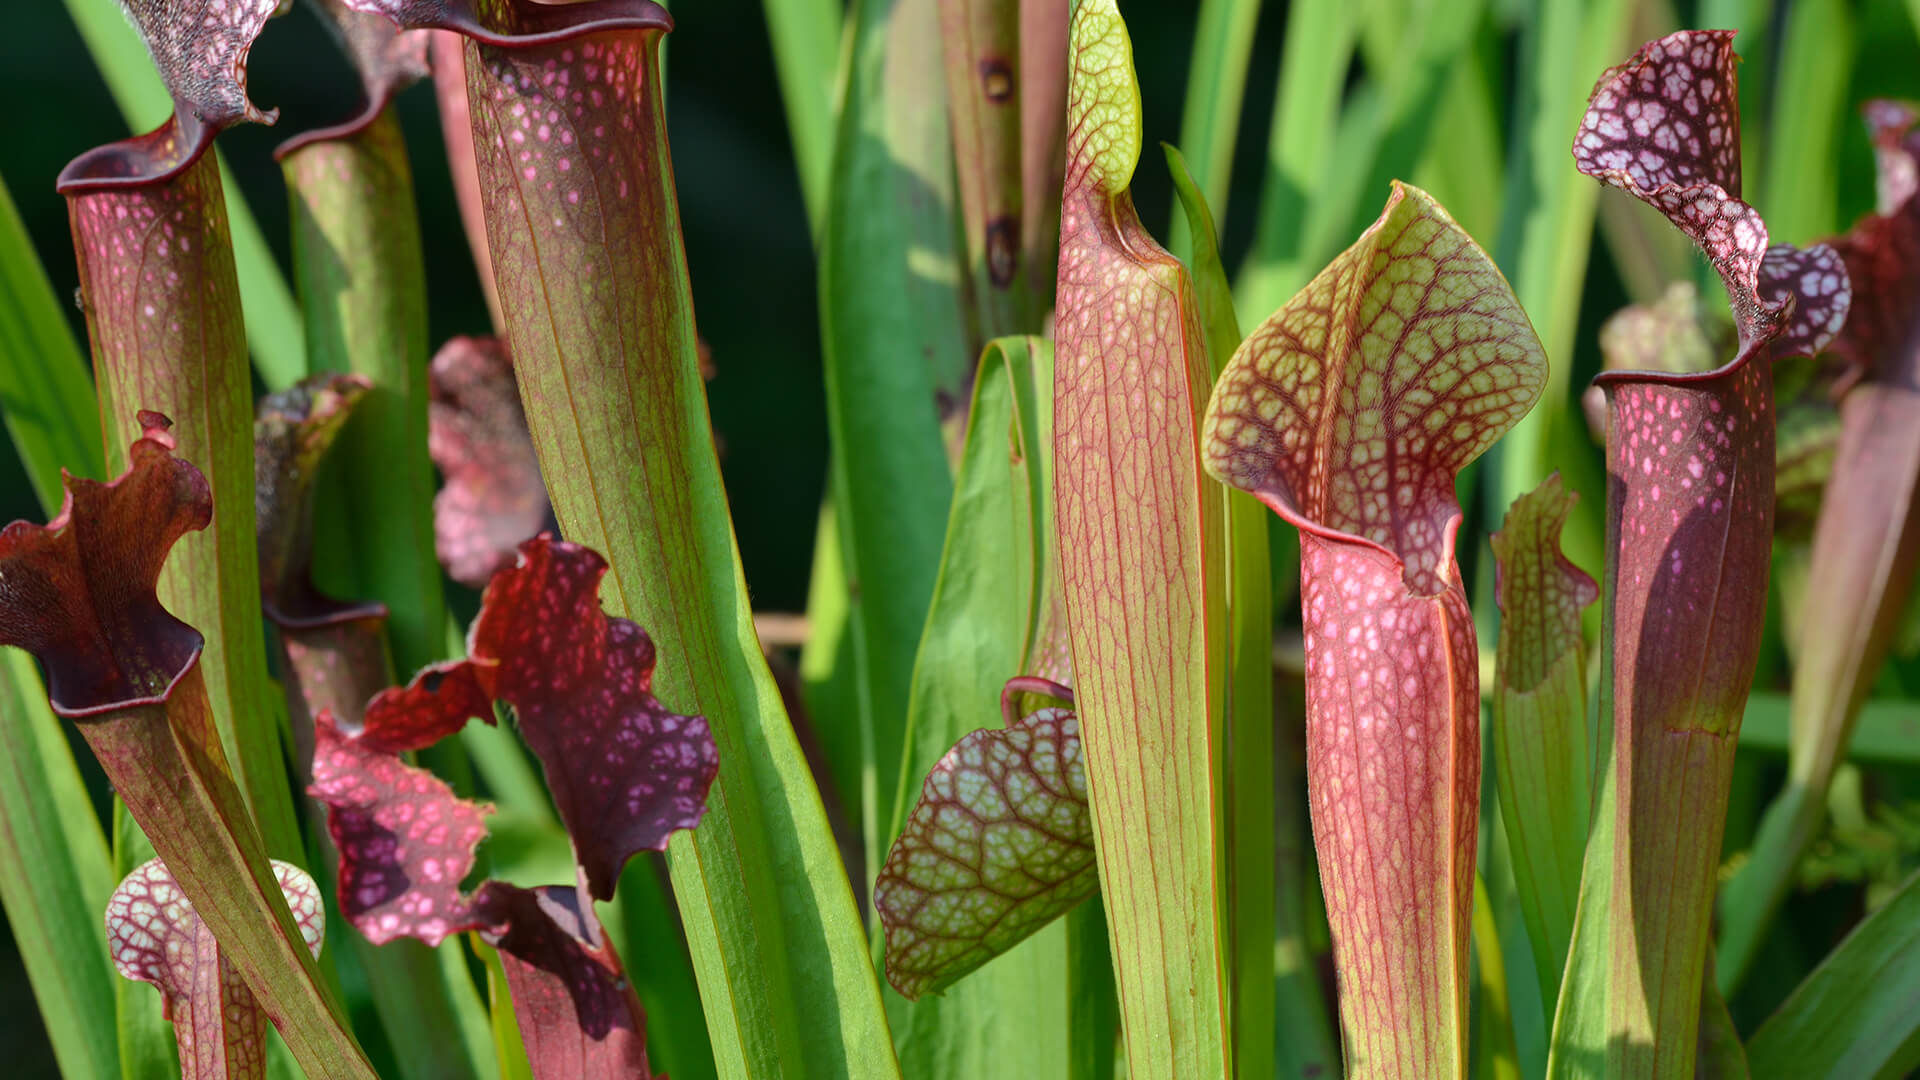 American pitcher plants